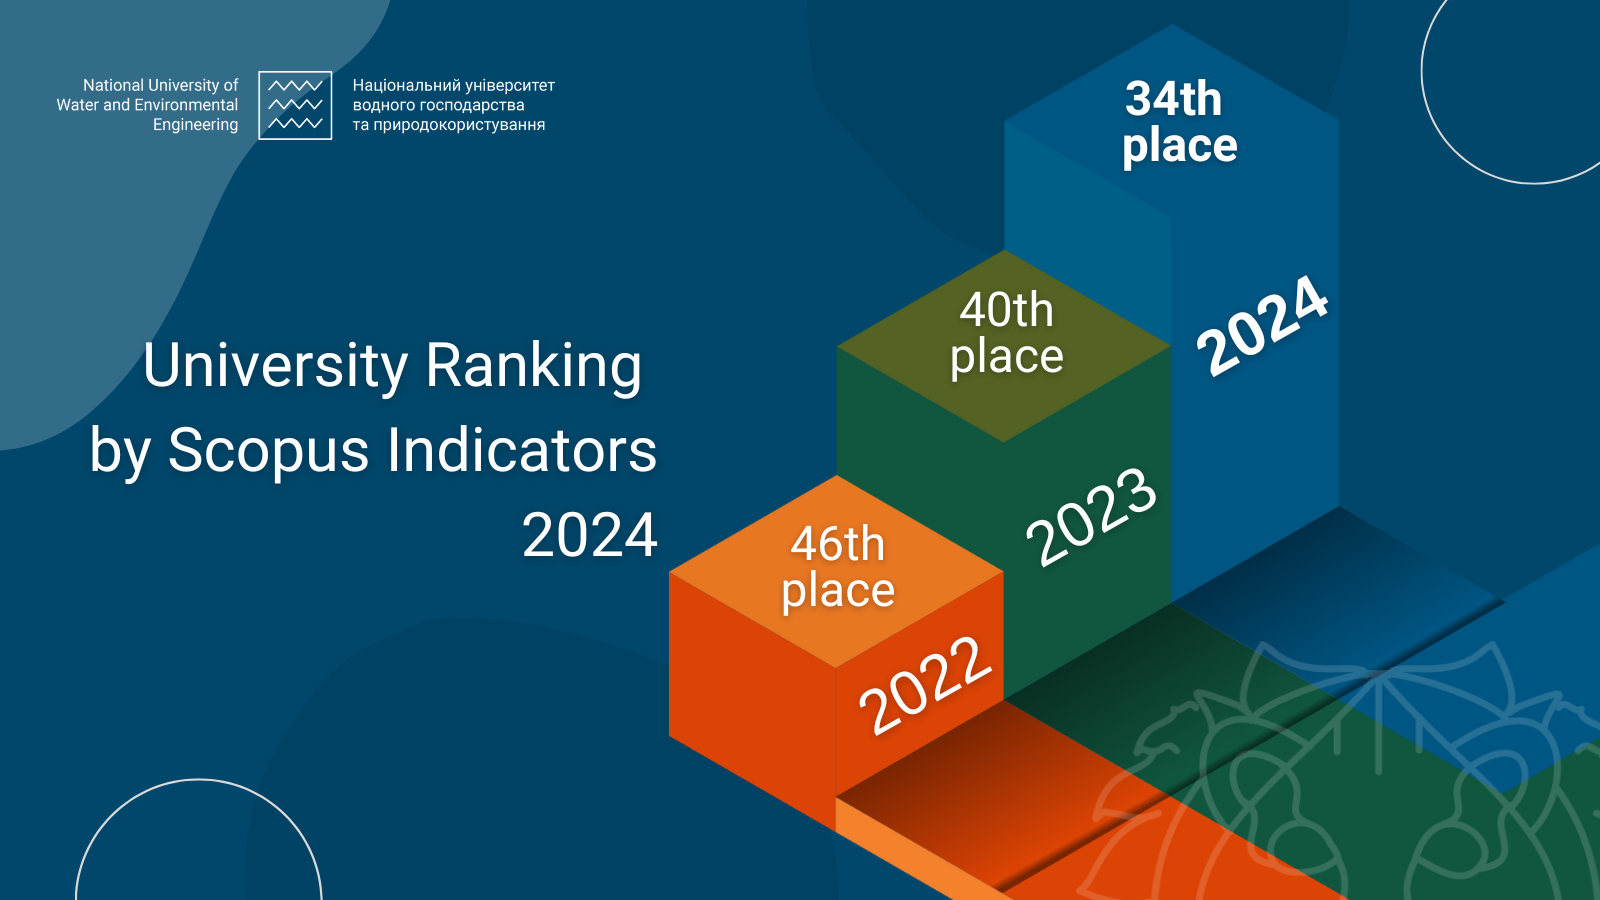 University Ranking by Scopus Indicators 2024